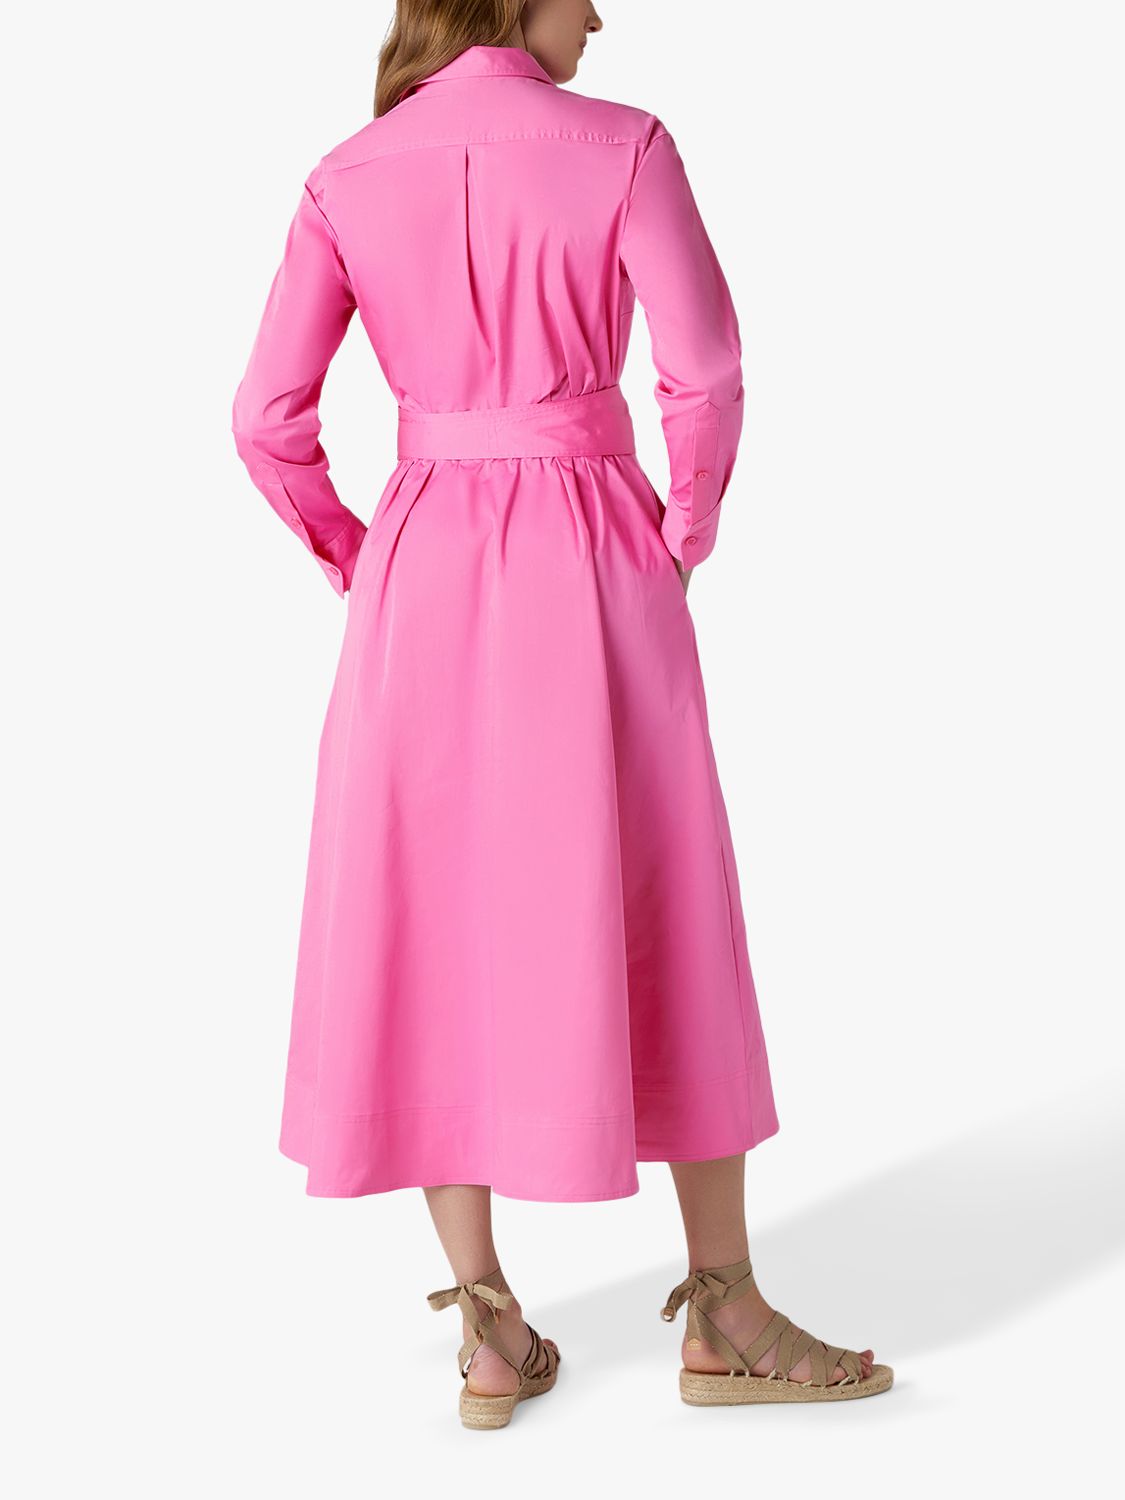 Jasper Conran Blythe Shirt Midi Dress, Hot Pink, 10